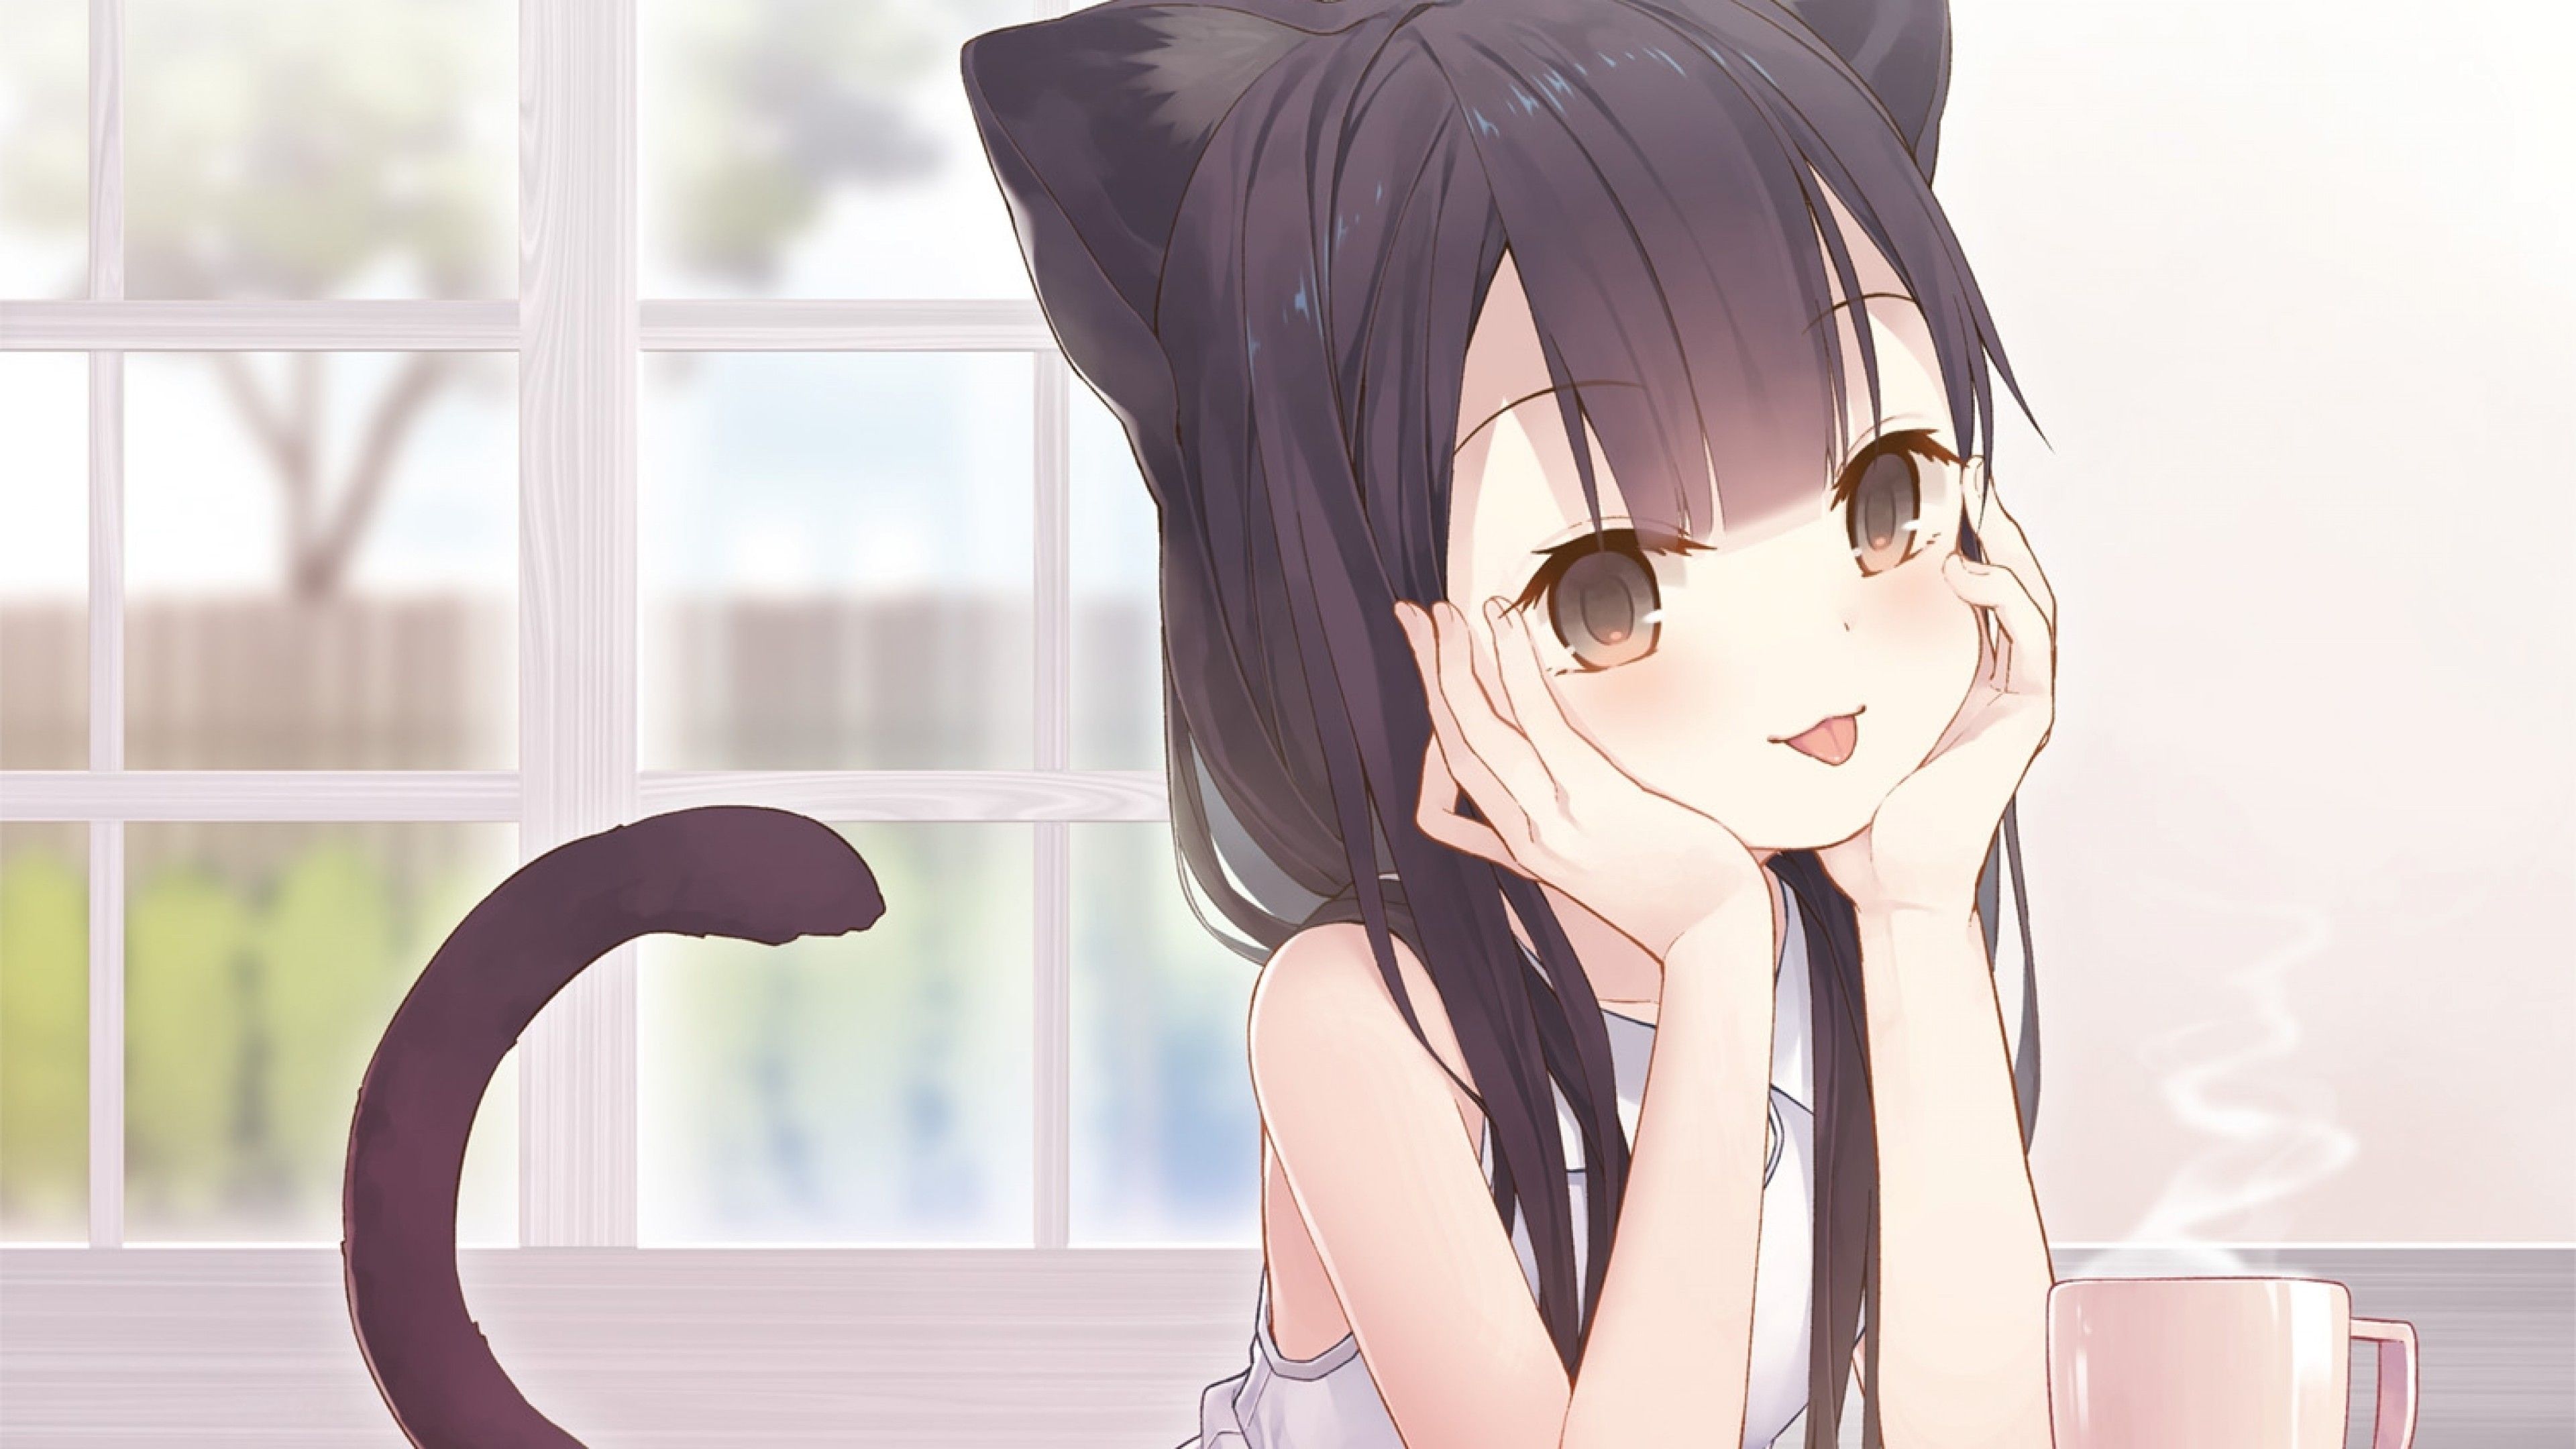 Anime Girl Cat из архива New фото для вас бесплатно 